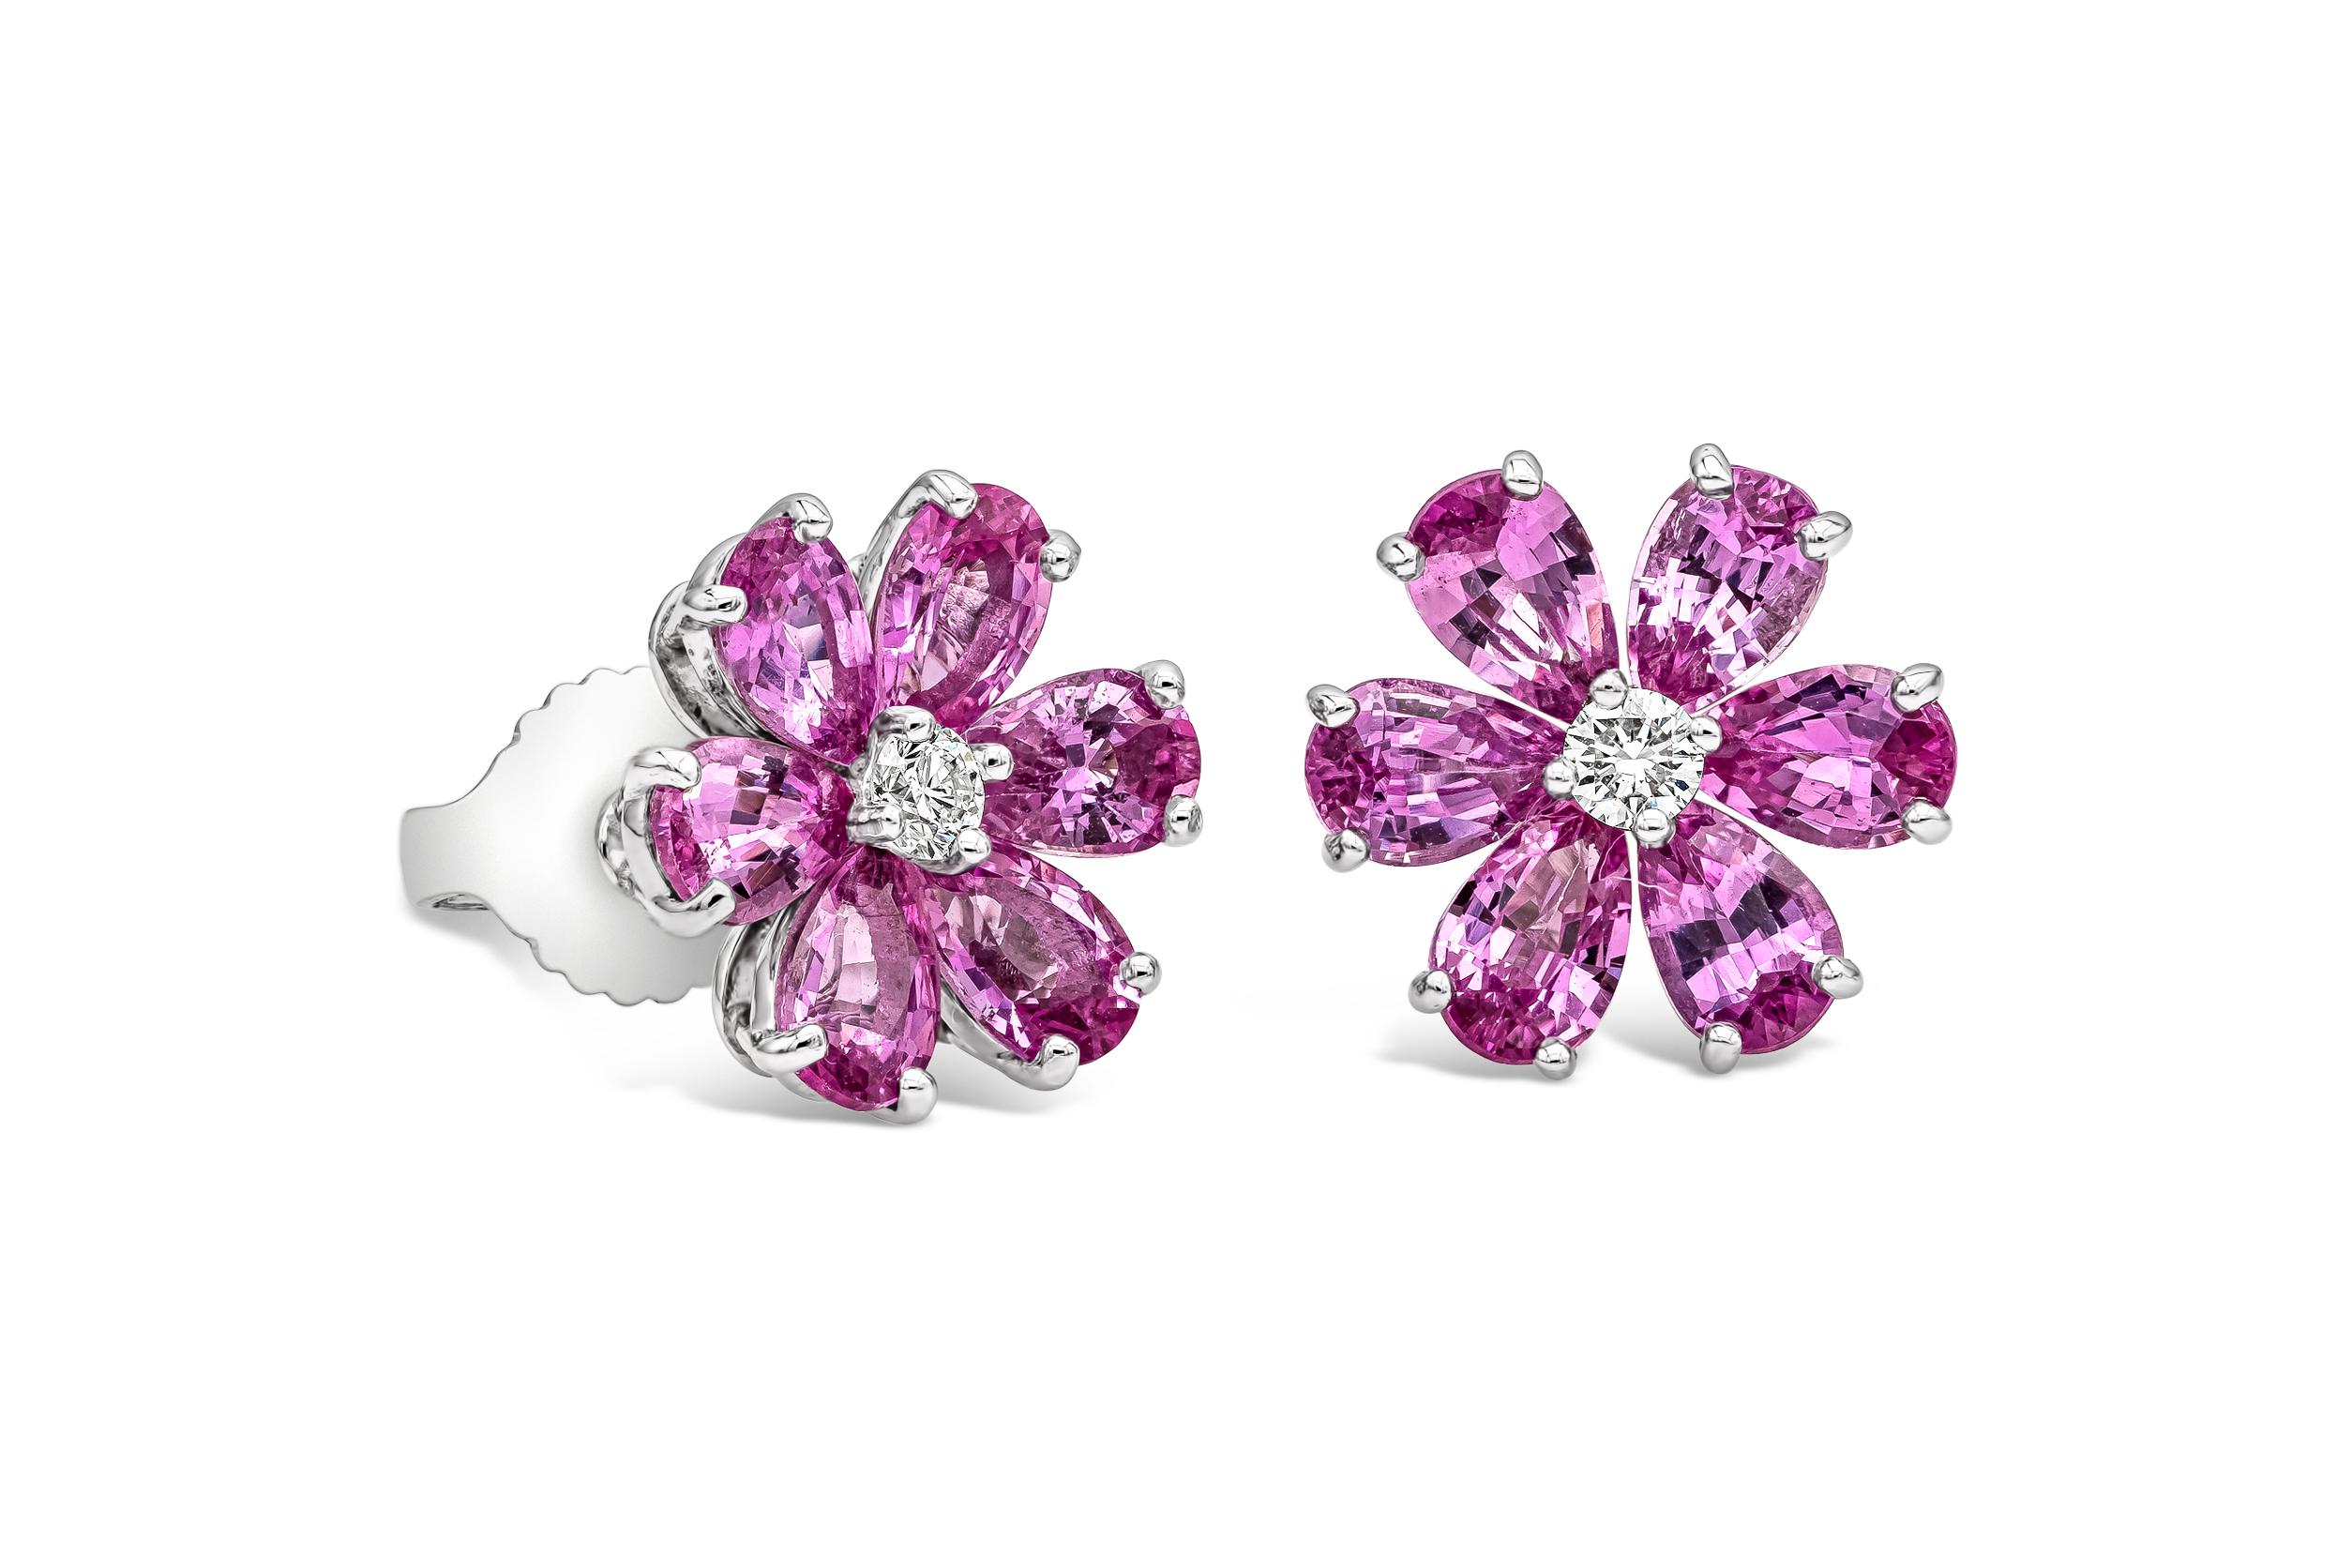 Contemporary Roman Malakov 2.94 Carat Pink Sapphire and Diamond Flower Earrings